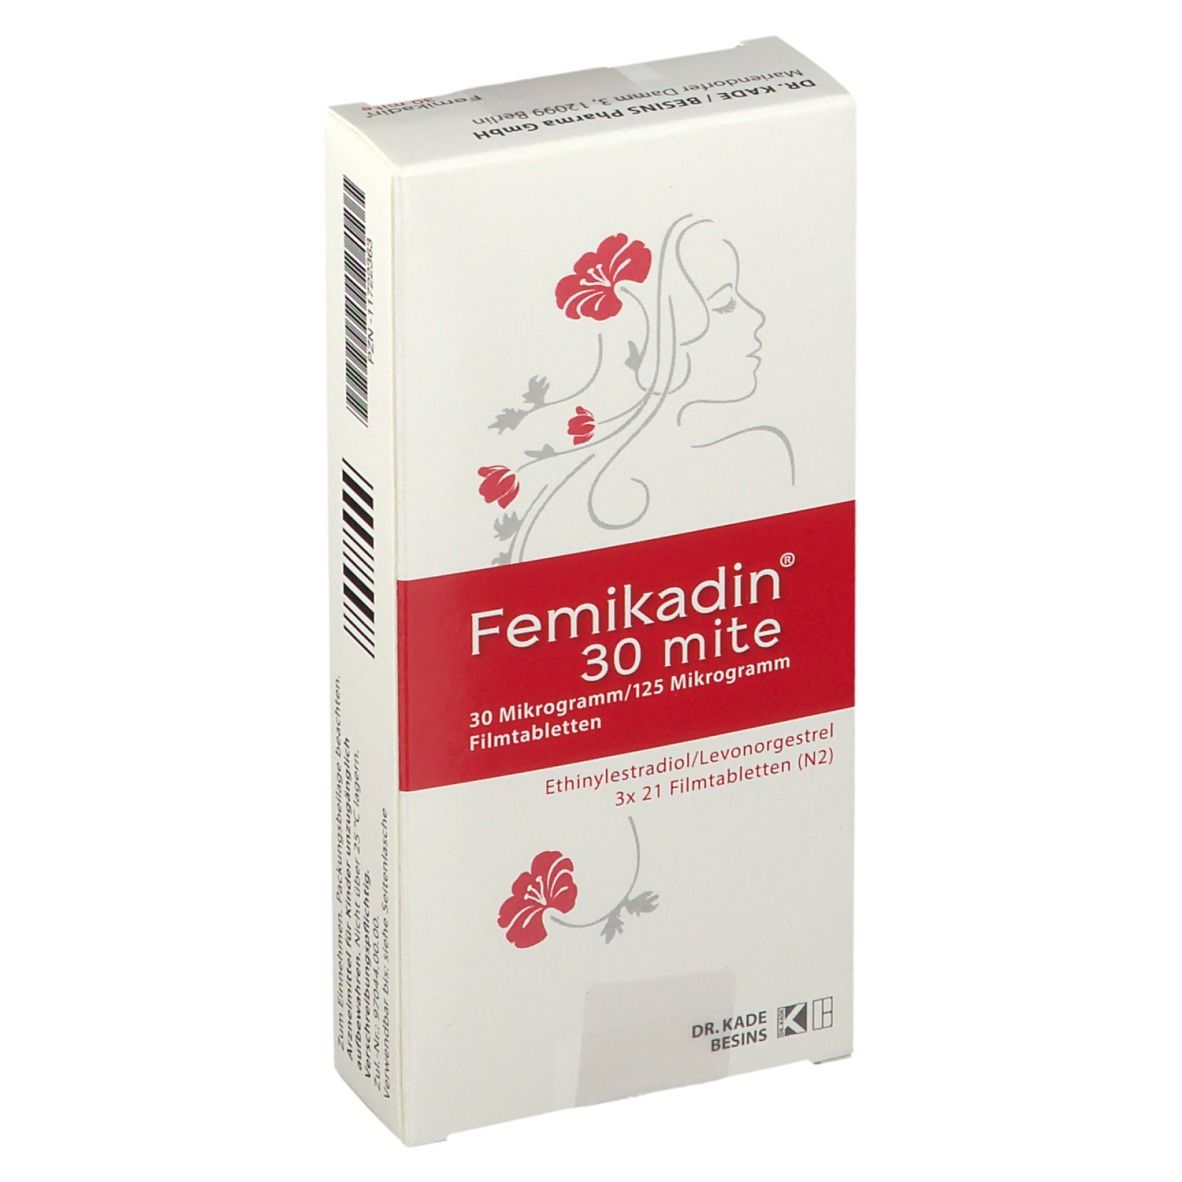 Femikadin® 30 mite